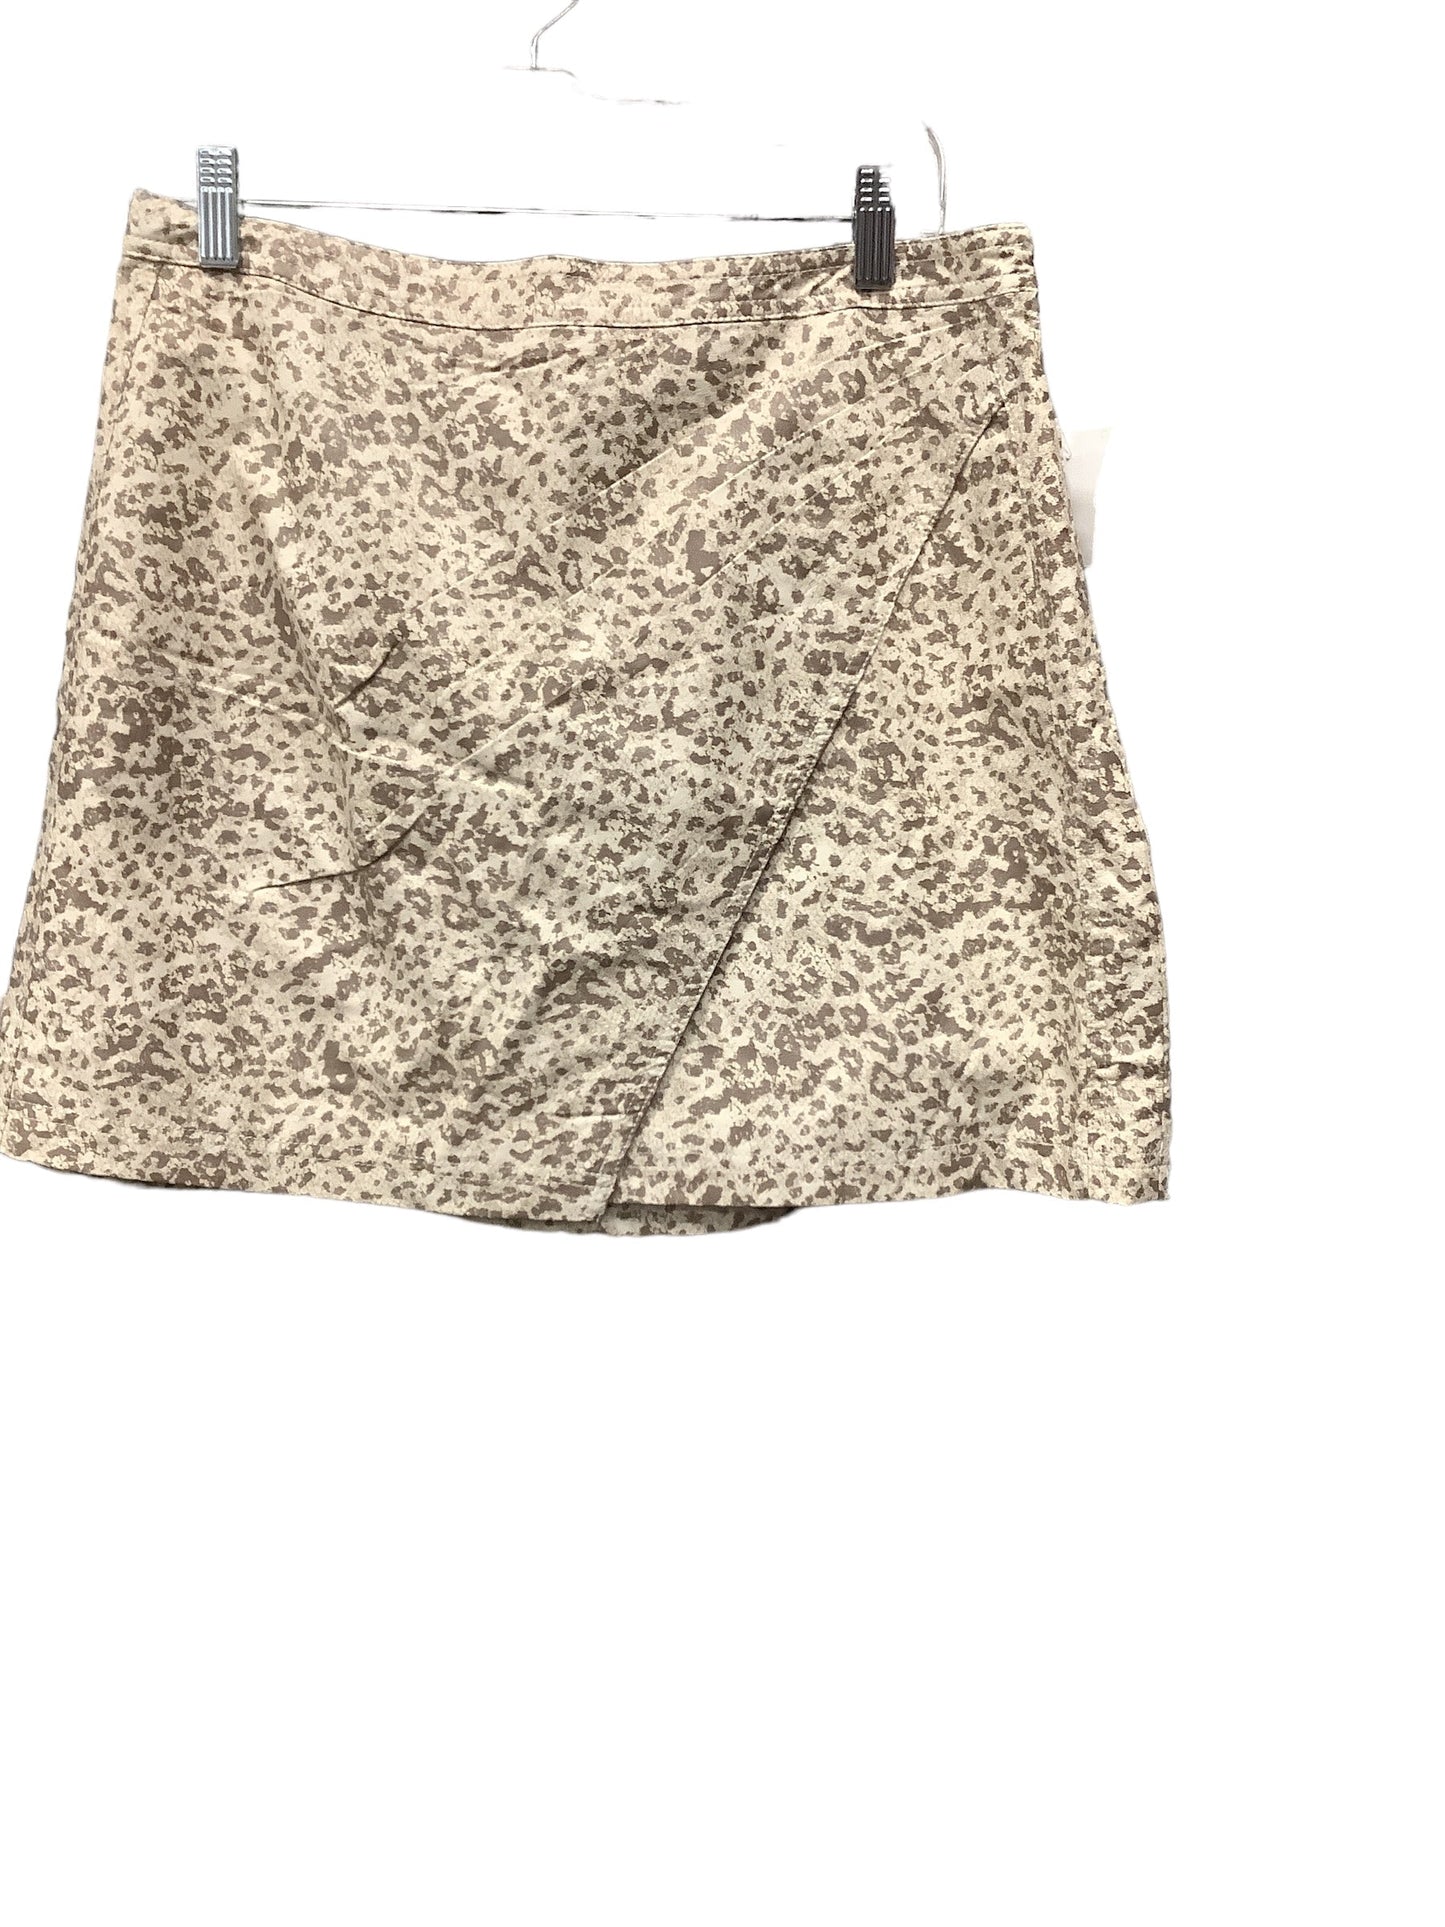 Snakeskin Print Skirt Mini & Short Free People, Size 12